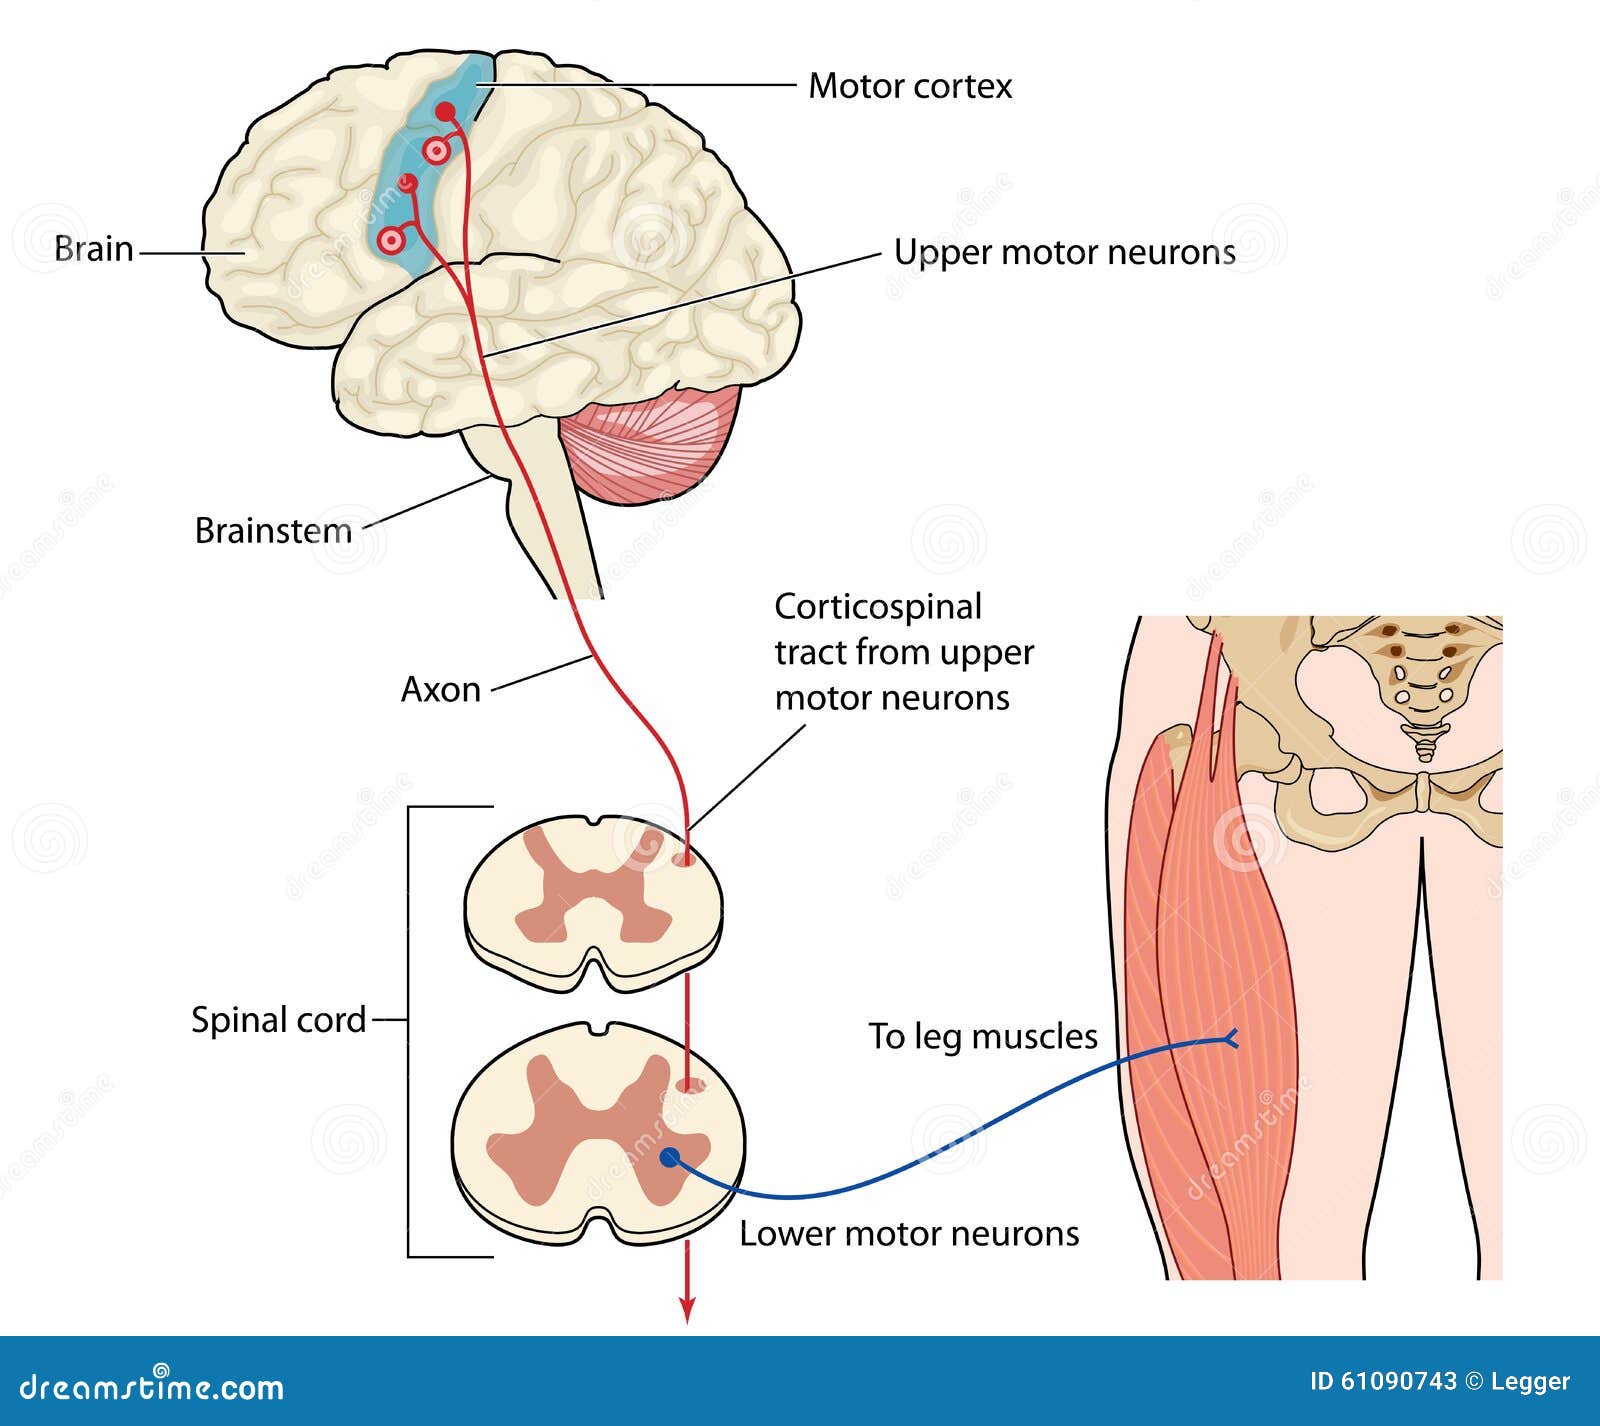 motor nerves from leg to motor cortex